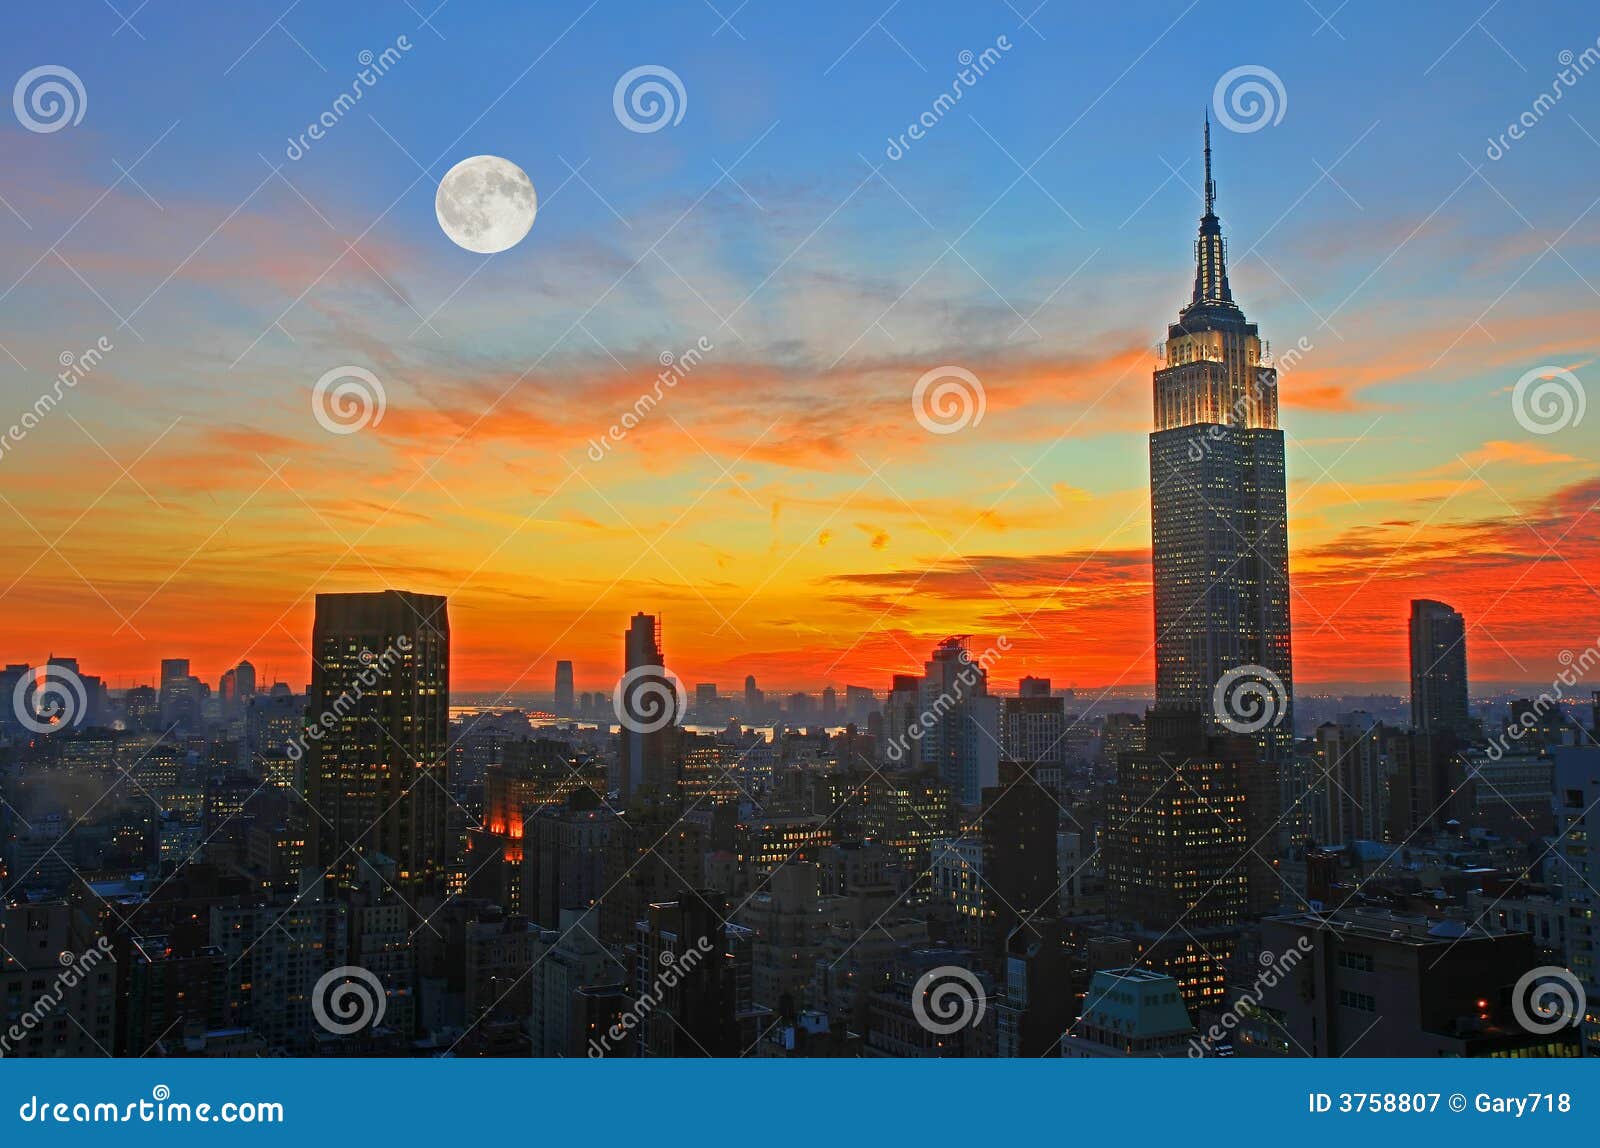 new york city midtown skyline